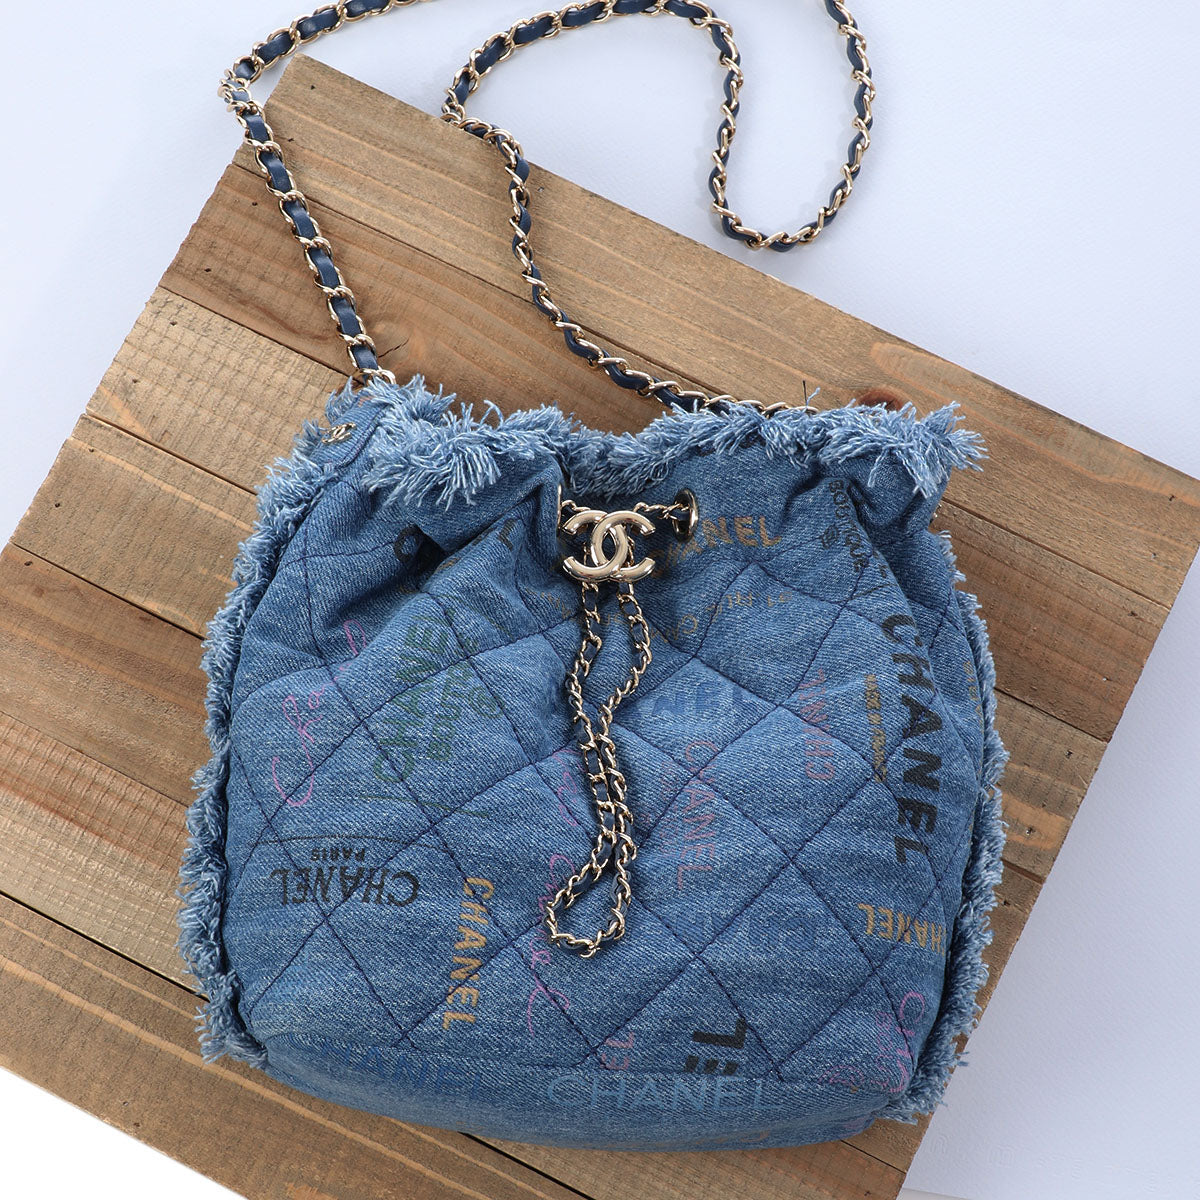 CHANEL Bag in Blue Denim Fabric with Beige Stitching  VALOIS VINTAGE PARIS